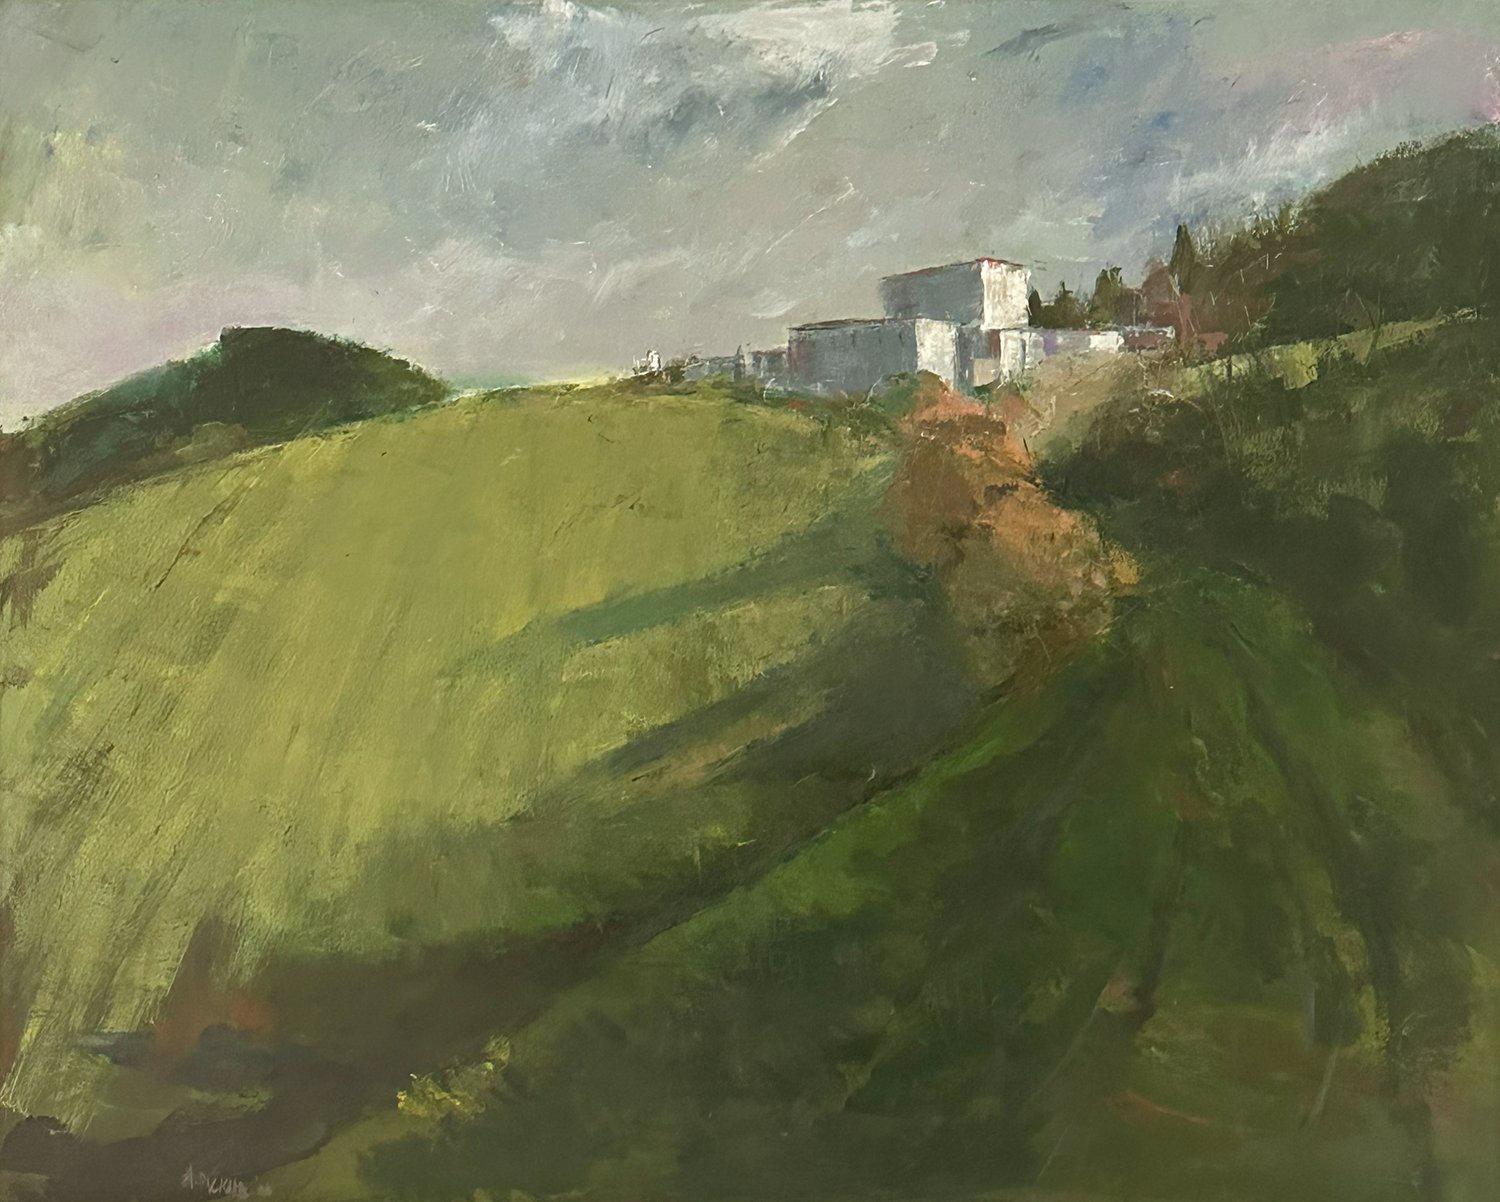 Ann Packard Landscape Painting - Anne Packard, "Italian Hillside", 48x60 Landscape Oil Painting on Canvas